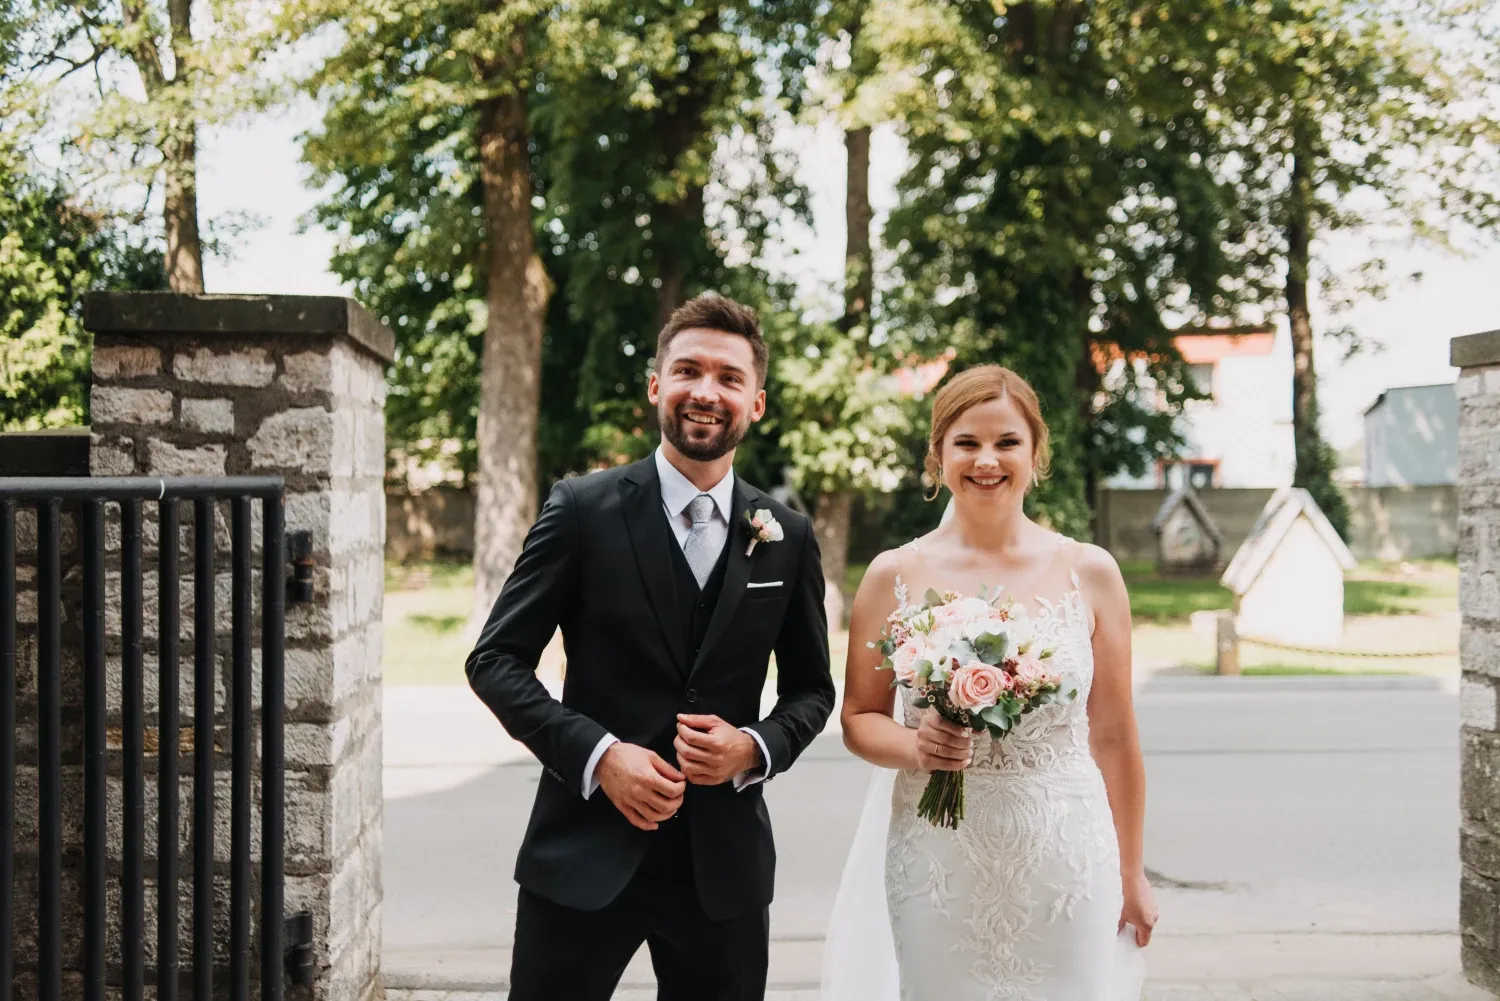 mariadaniel_wedding_9.webp - Maria & Daniel- Monika Chmielewska - wedding, portaits, family photography - Munich